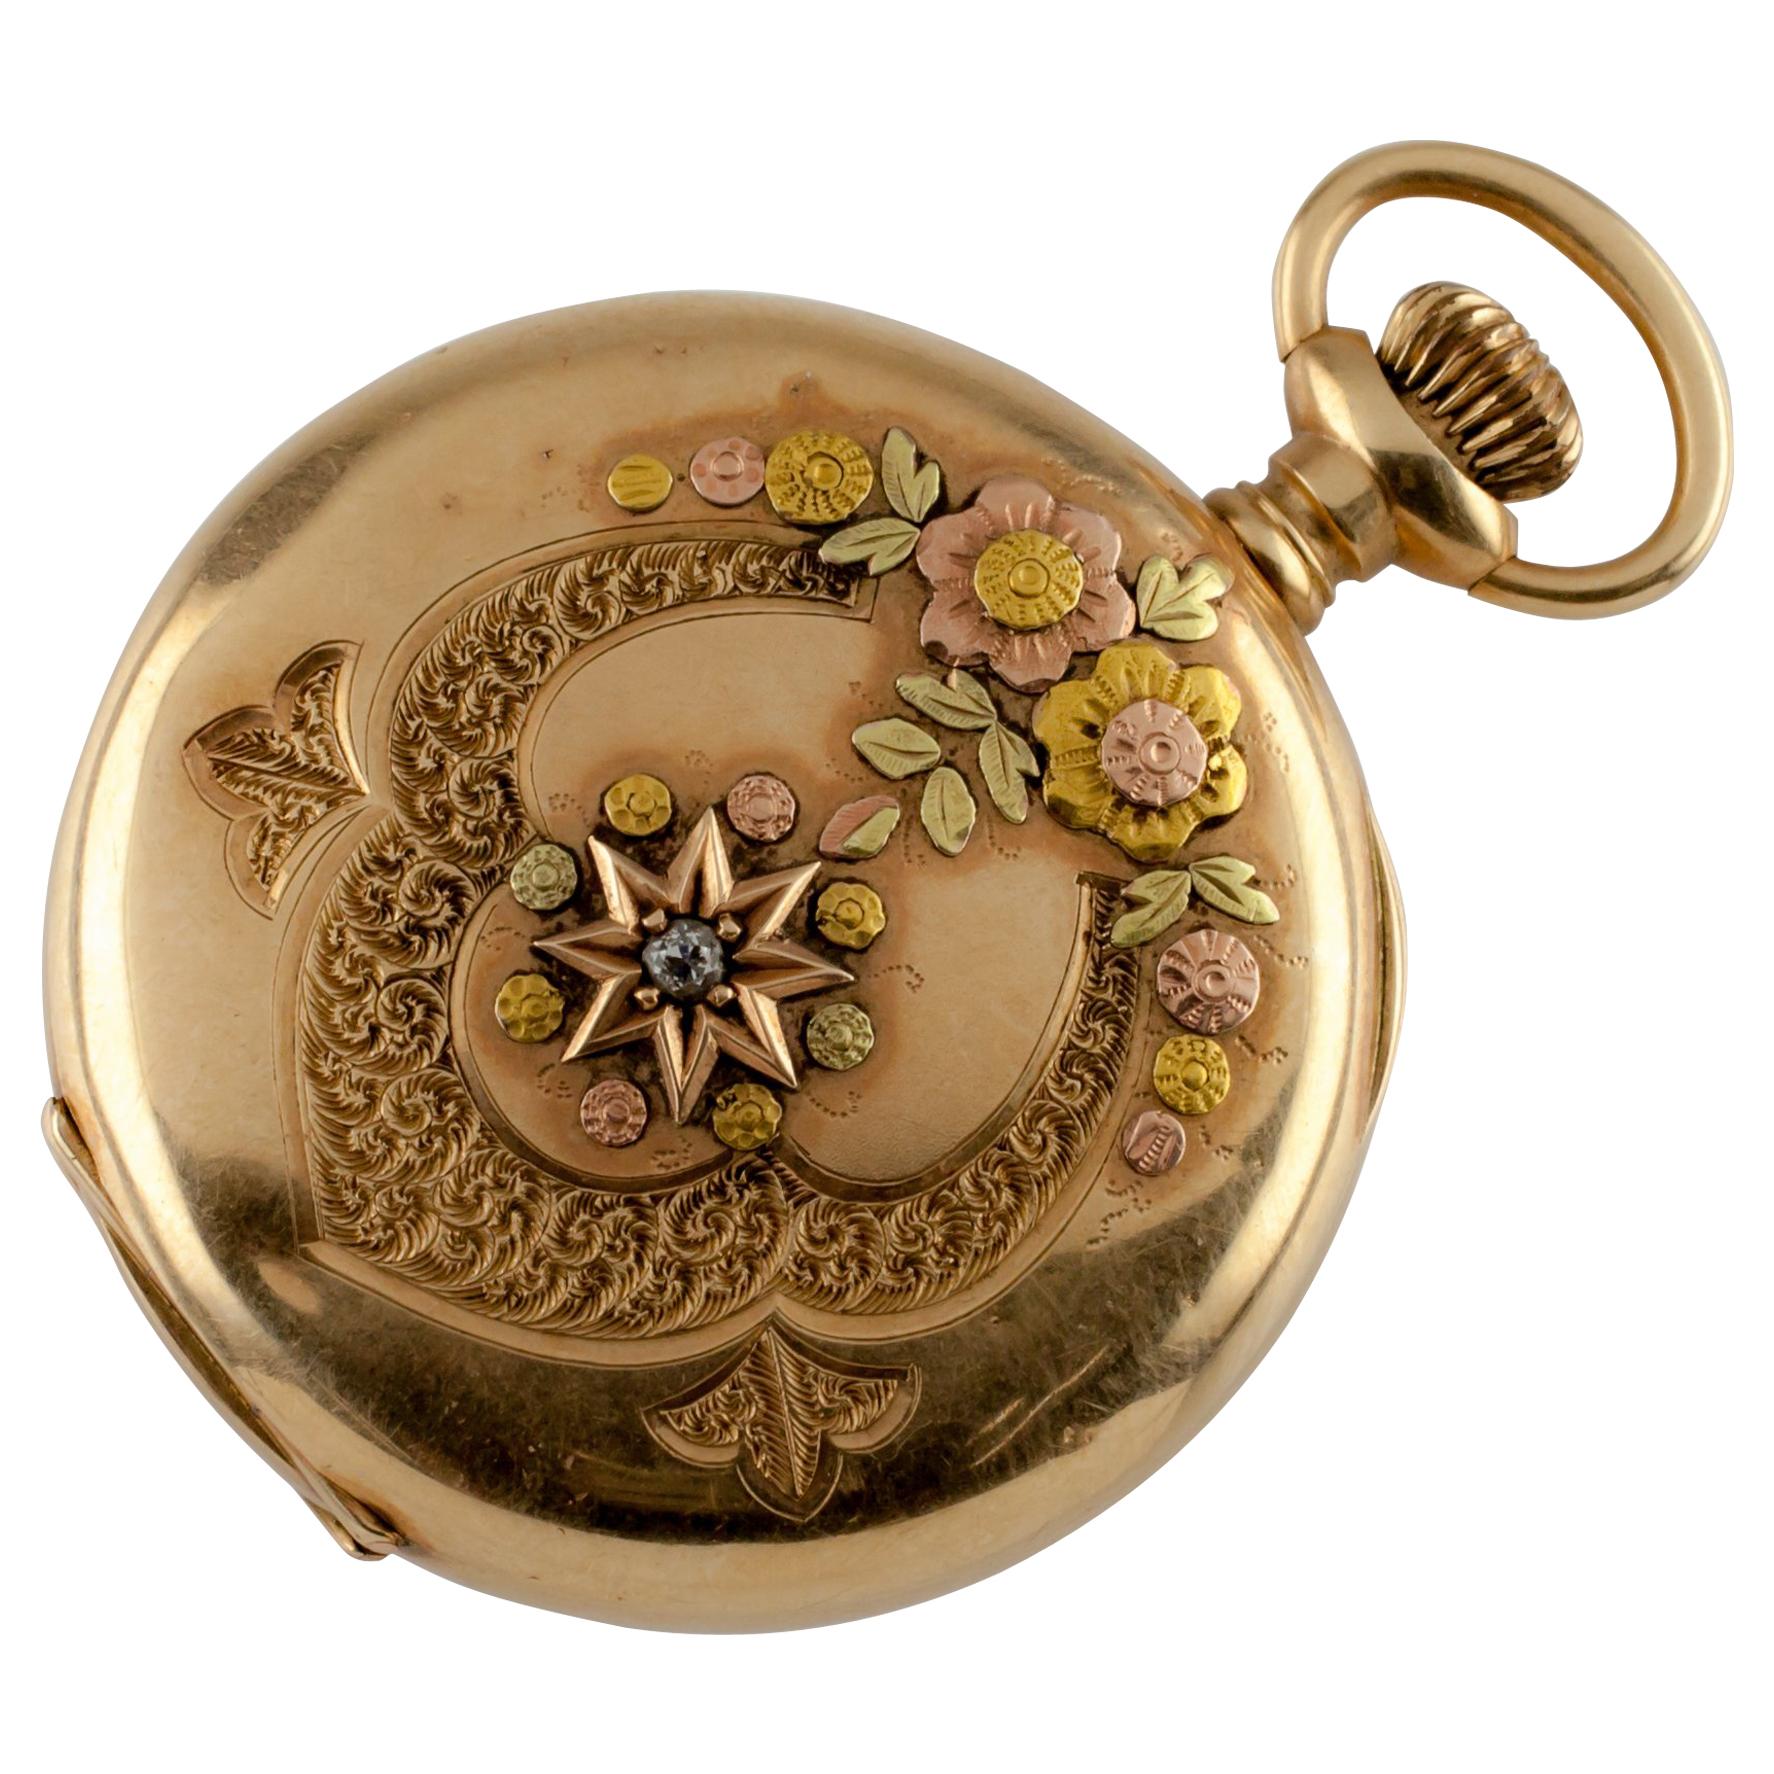 Waltham Full Hunter 14 Karat Yellow Gold Pocket Watch 16 Jewel, 1900